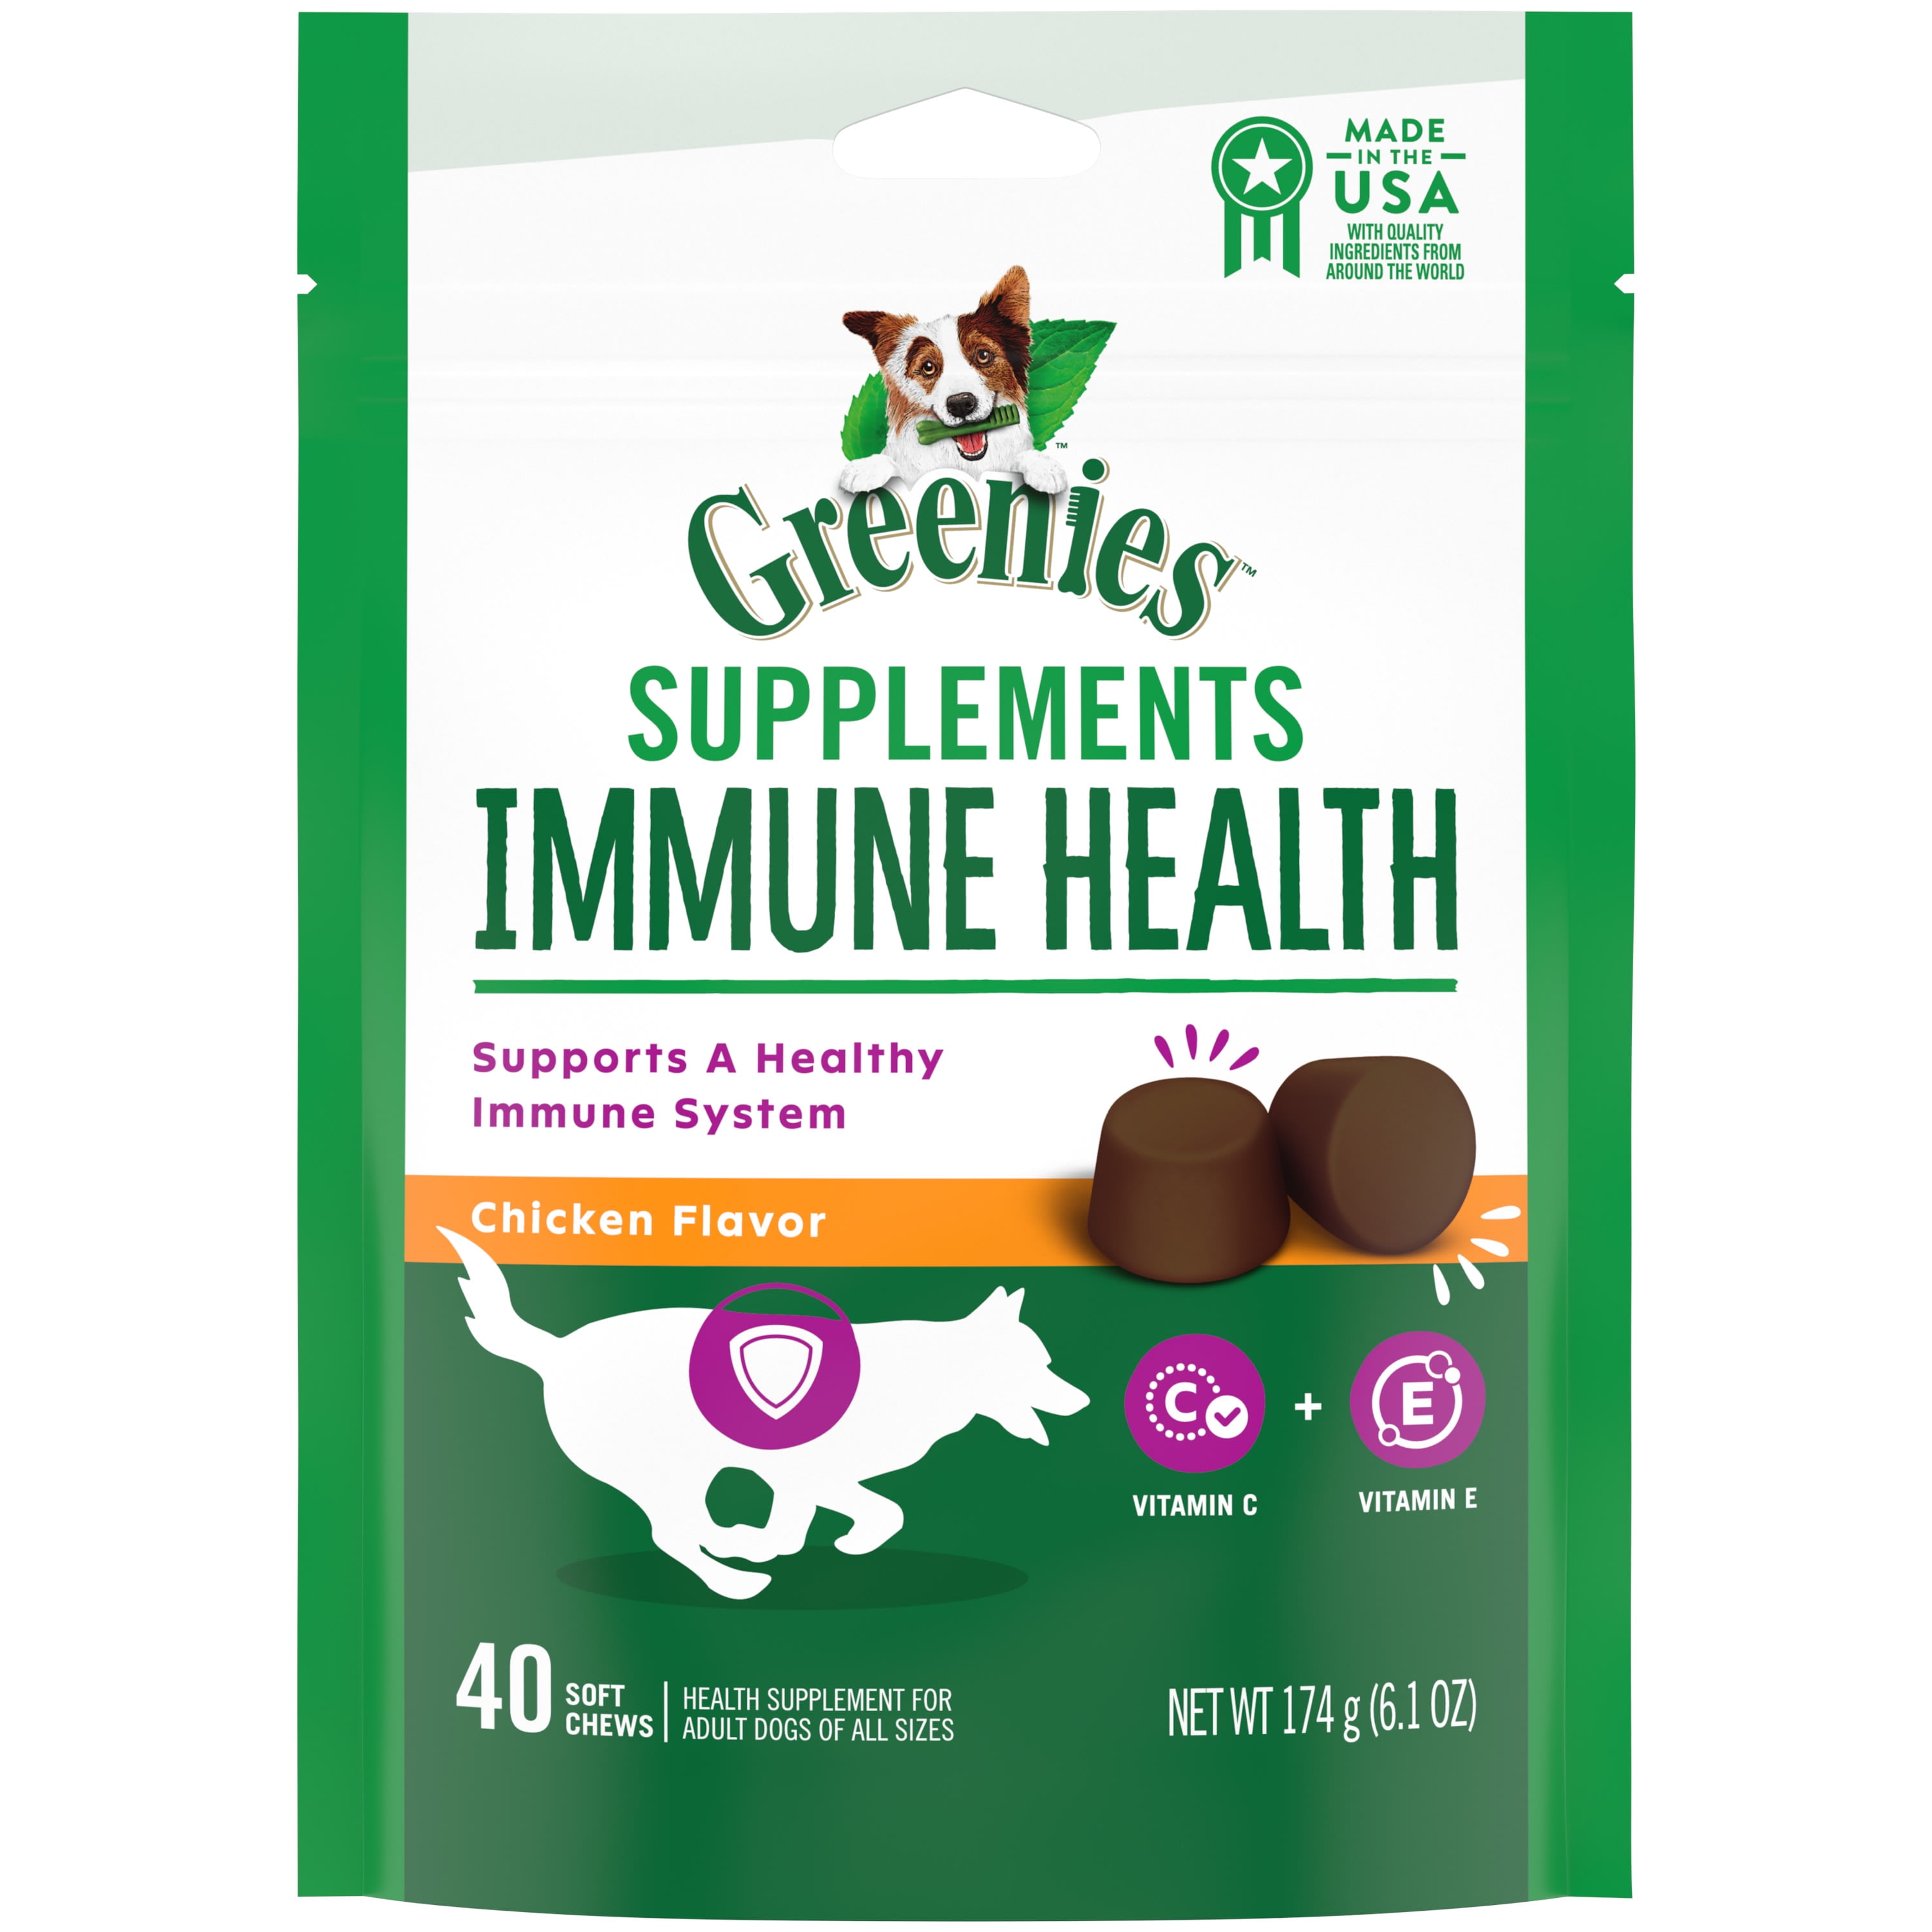 GREENIES Dog Supplements Chicken Flavor for Immune Health Soft Chew Treats, 6.1 Oz Pouch, 40-Count